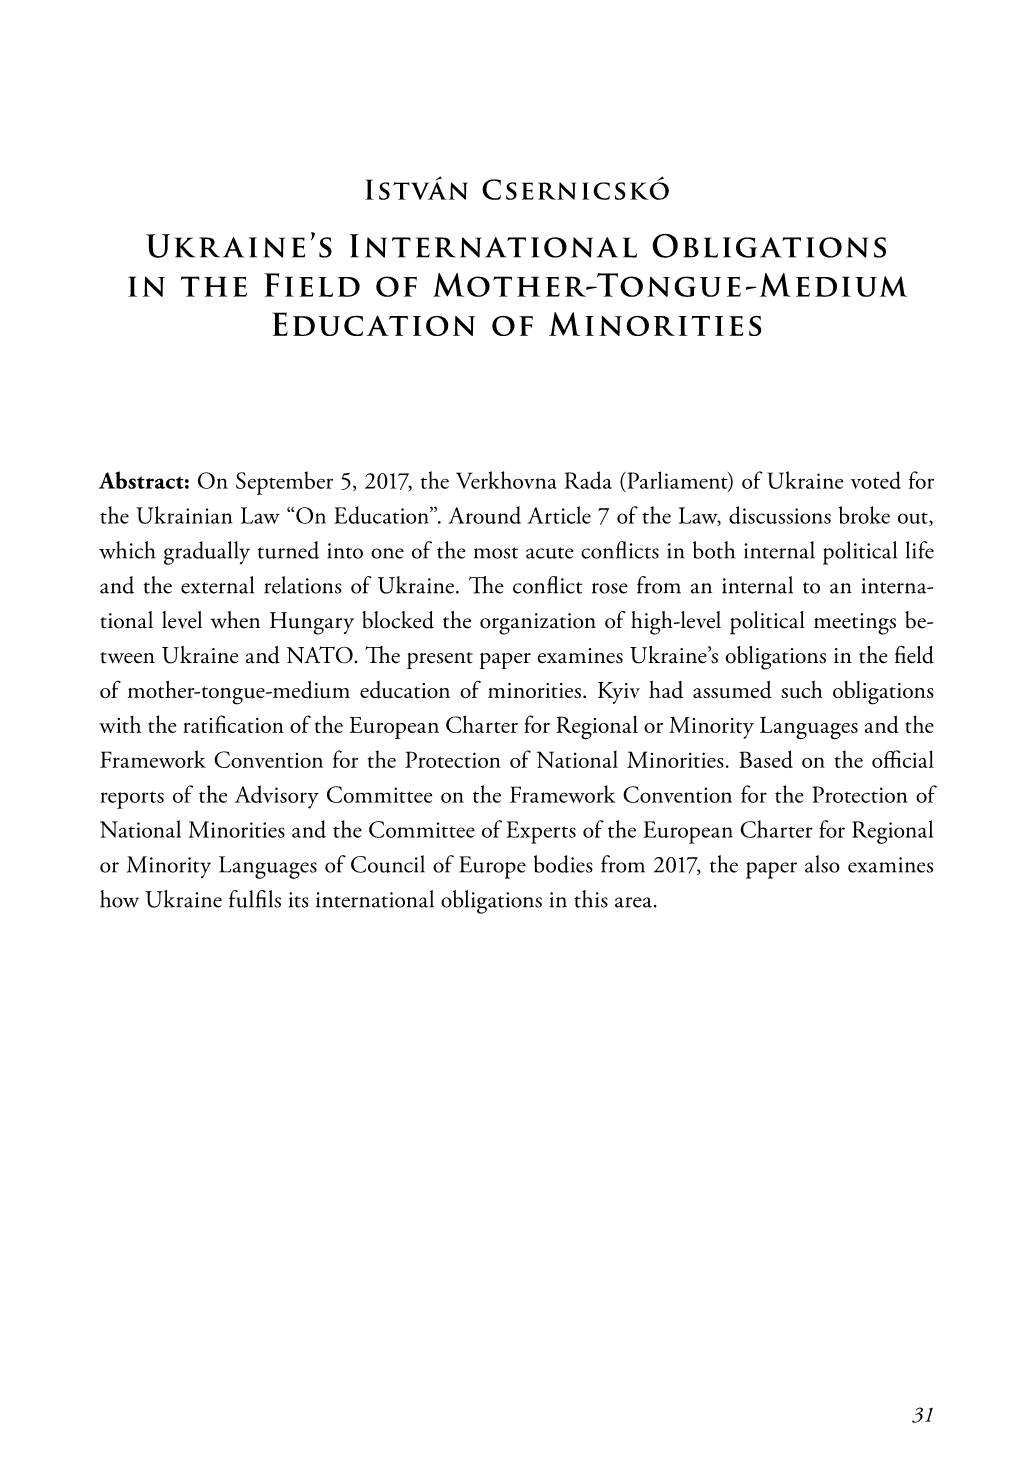 Ukraine's International Obligations in the Field of Mother-Tongue-Medium